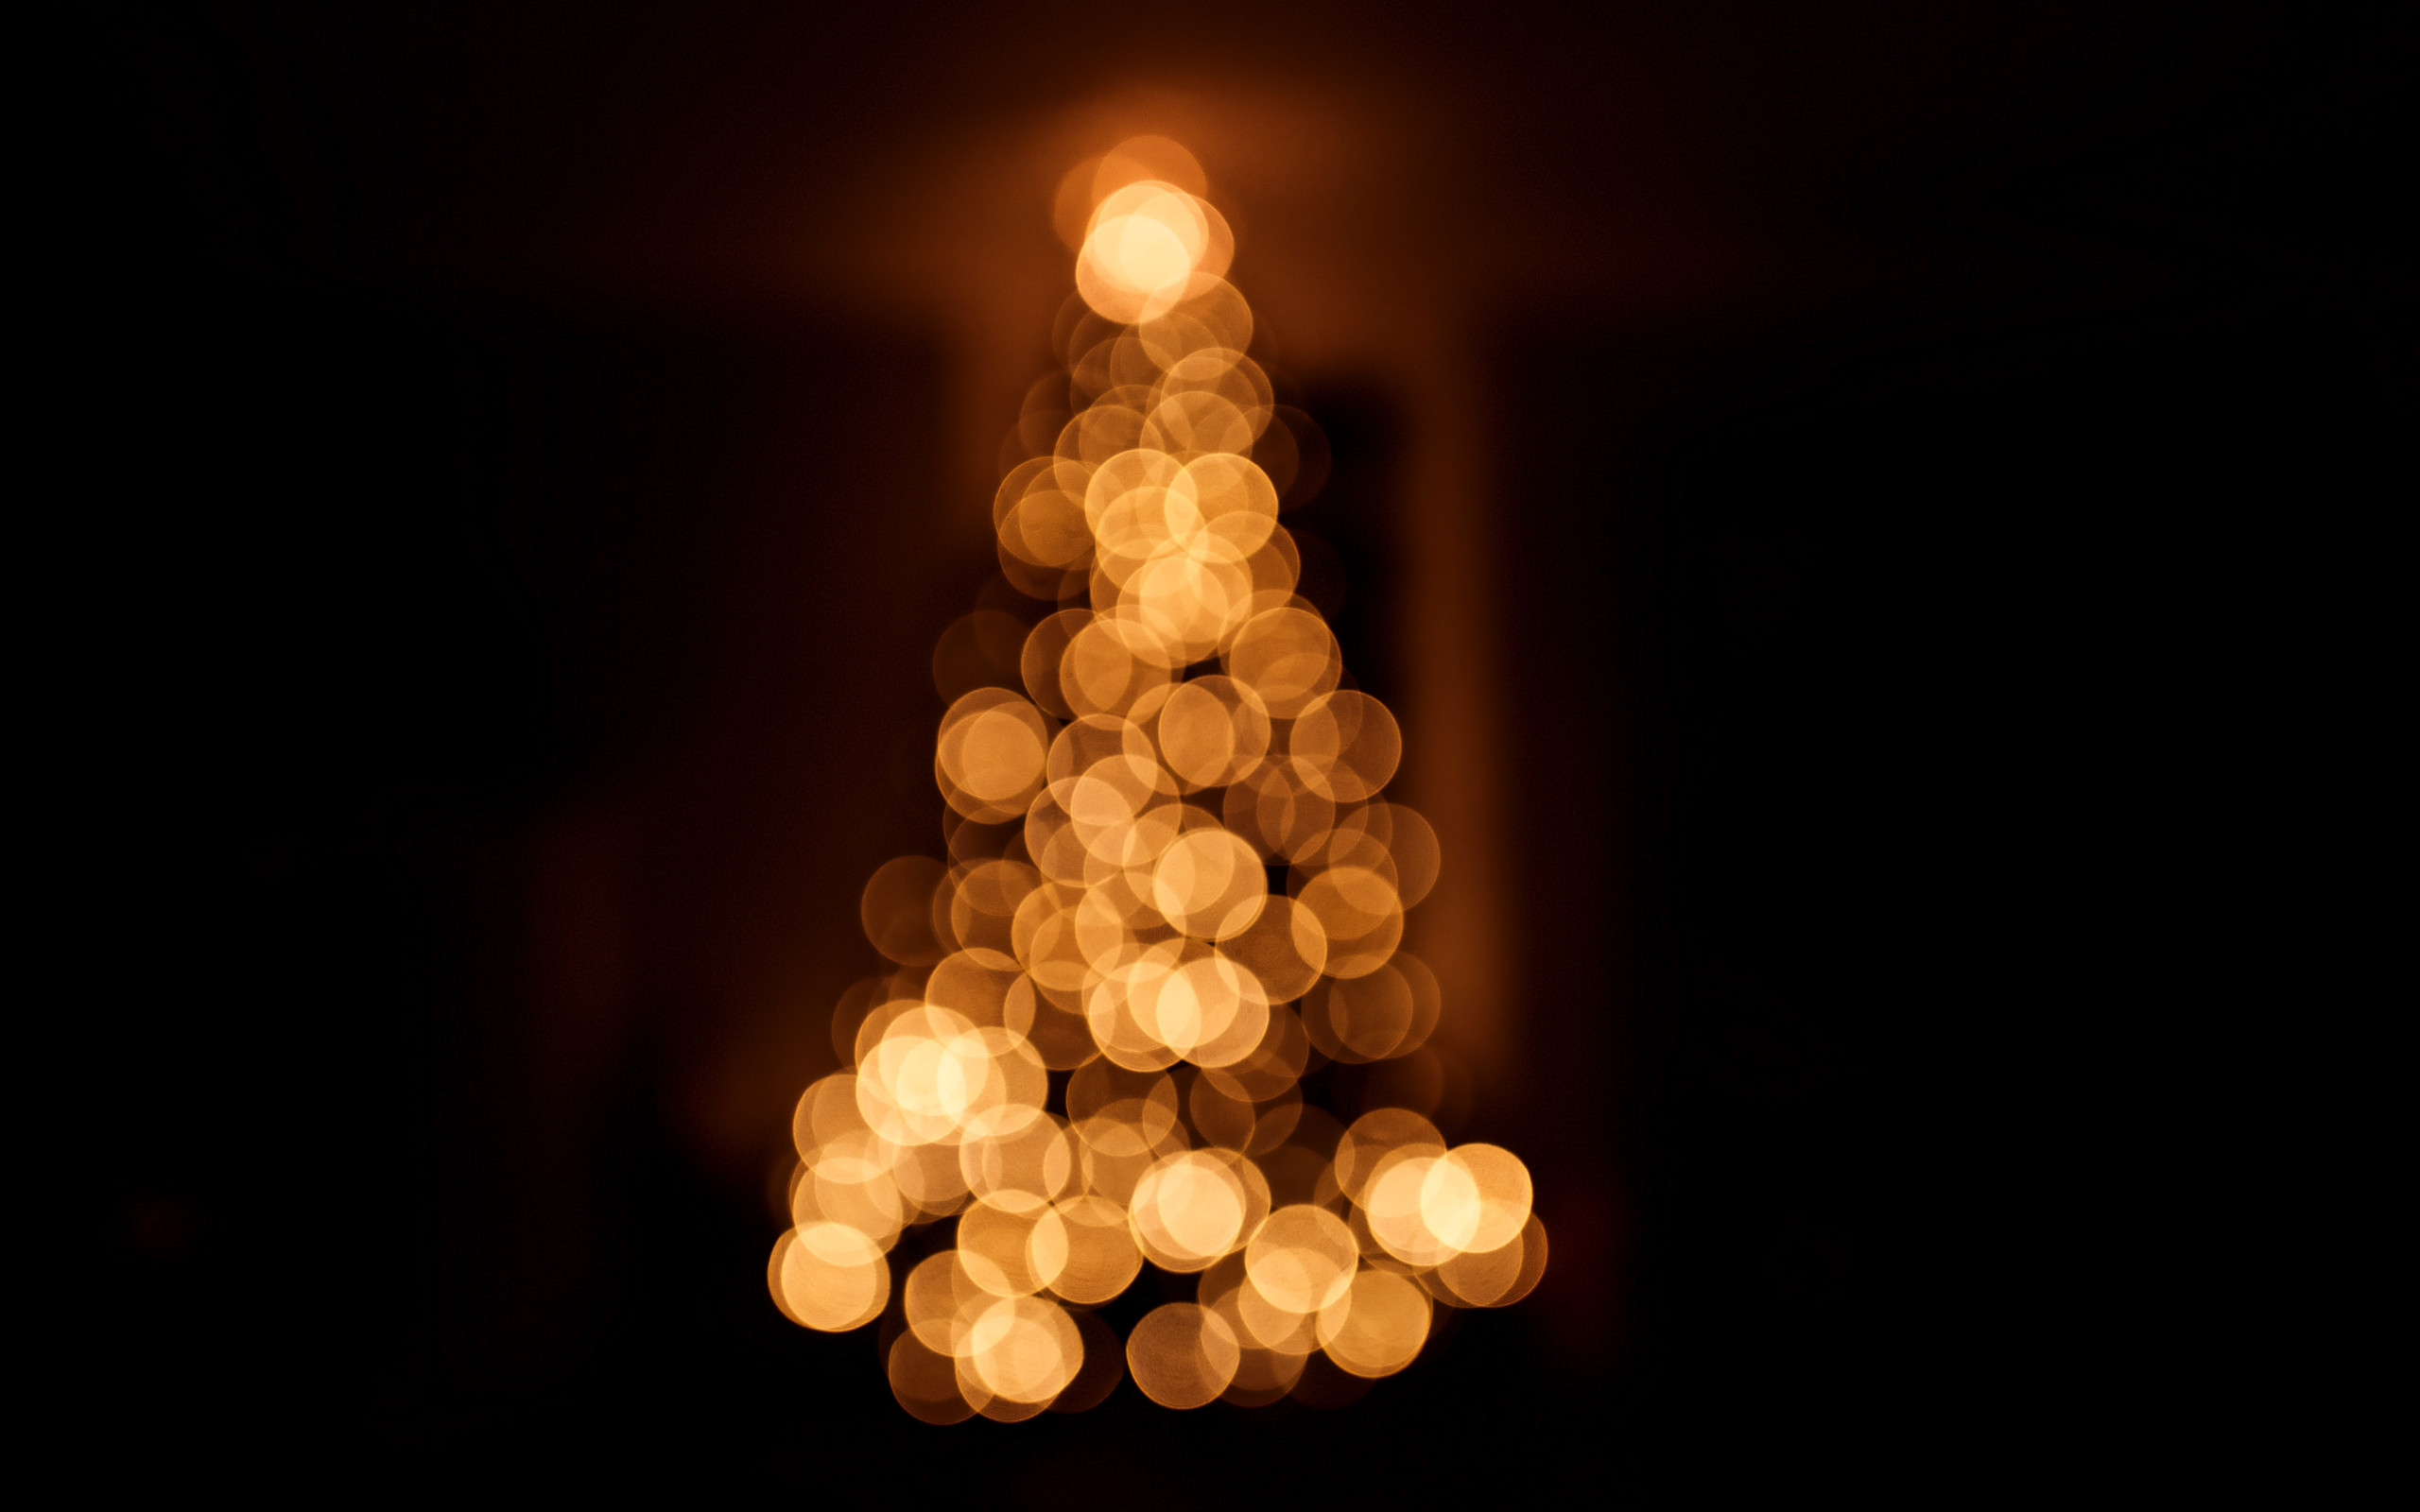 Download wallpaper: Bokeh Christmas tree 2560x1600